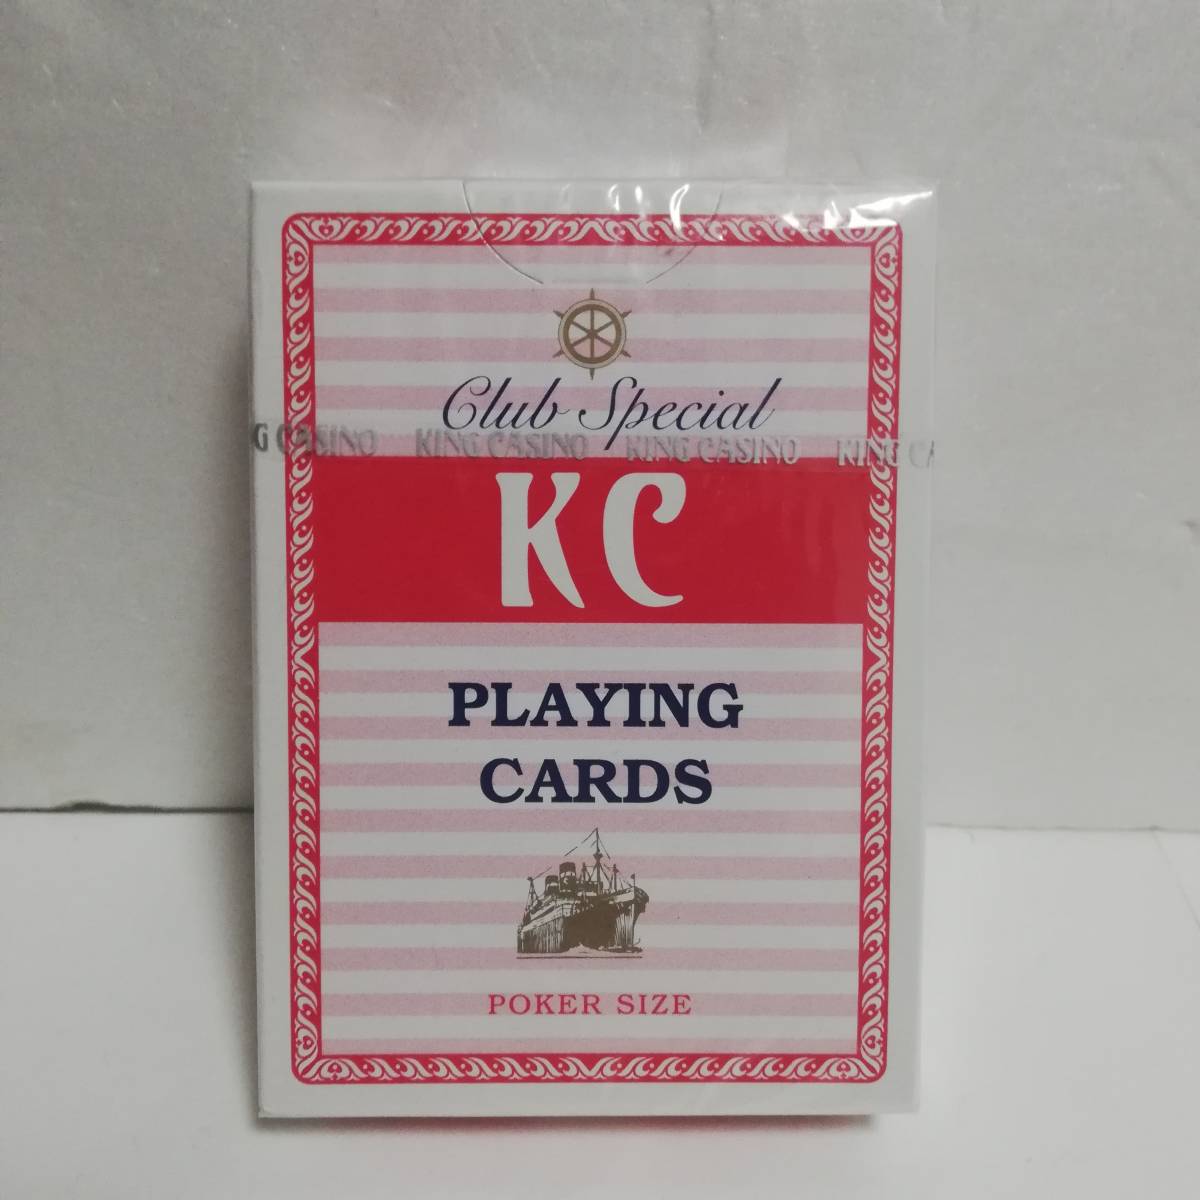 ◆Club Special KC PLAYING CARDS POKER SIZE◆プレイングカード ◆ポーカーサイズ ◆トランプ ◆KING CASINO◆キングカジノ◆未開封品の画像1